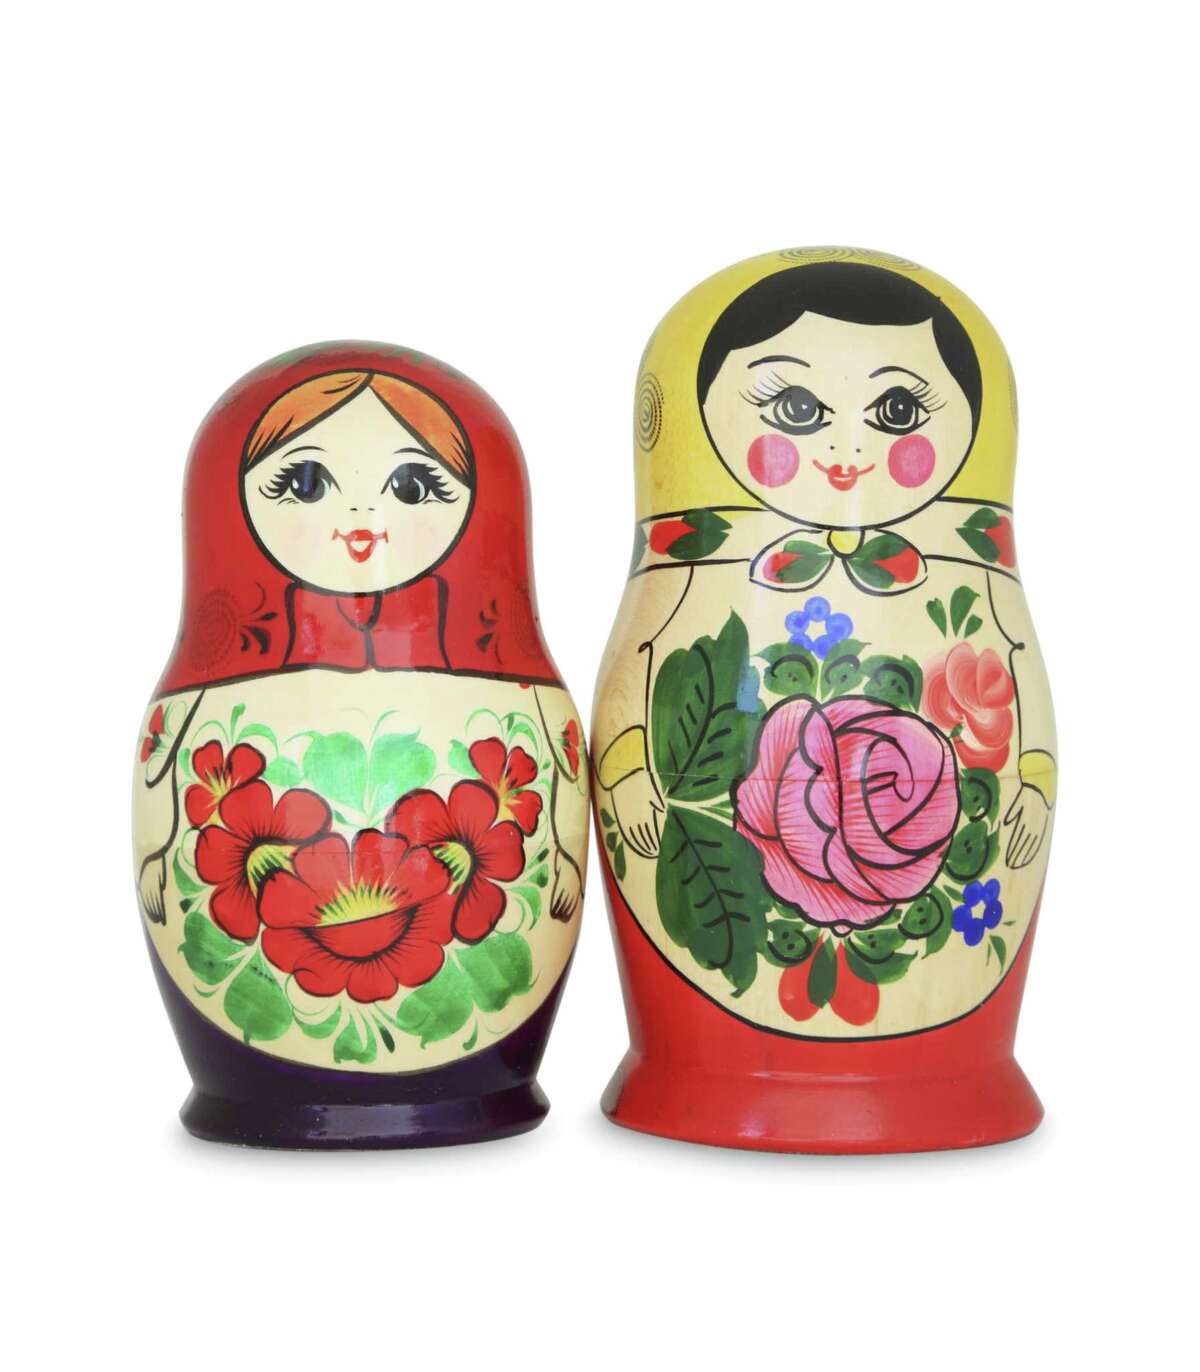 Scientists agree: Lesbians are inanimate Russian Matryoshka dolls. (Not pictured: Vladimir Putin) 